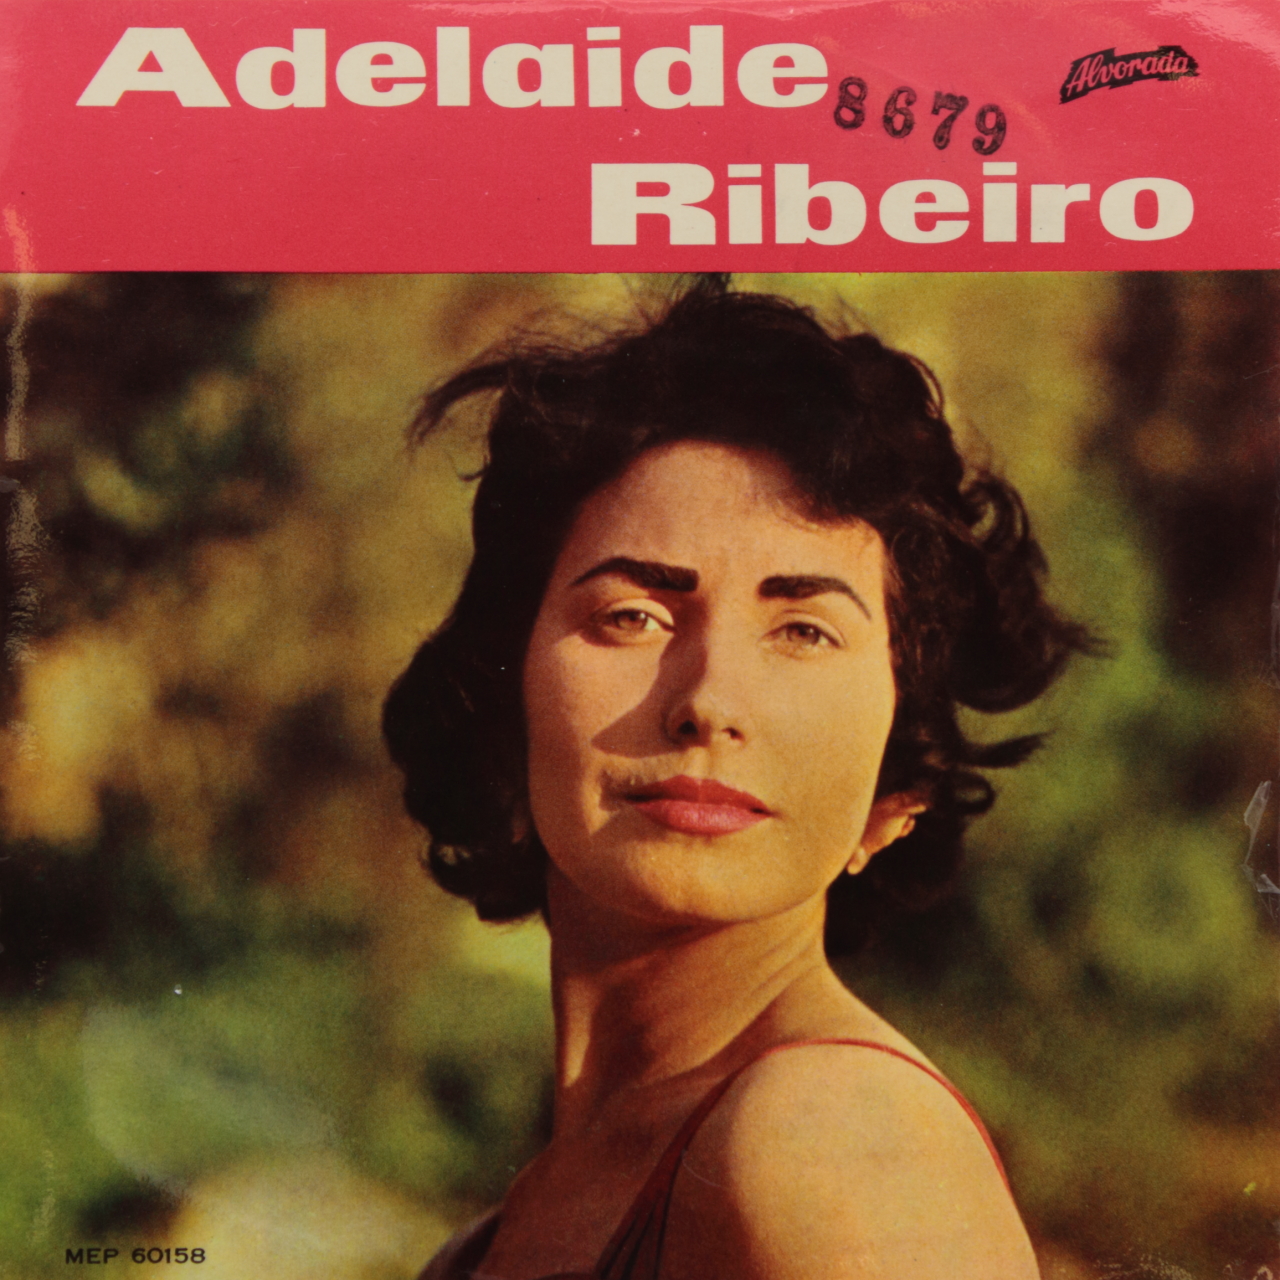 Adelaide Ribeiro